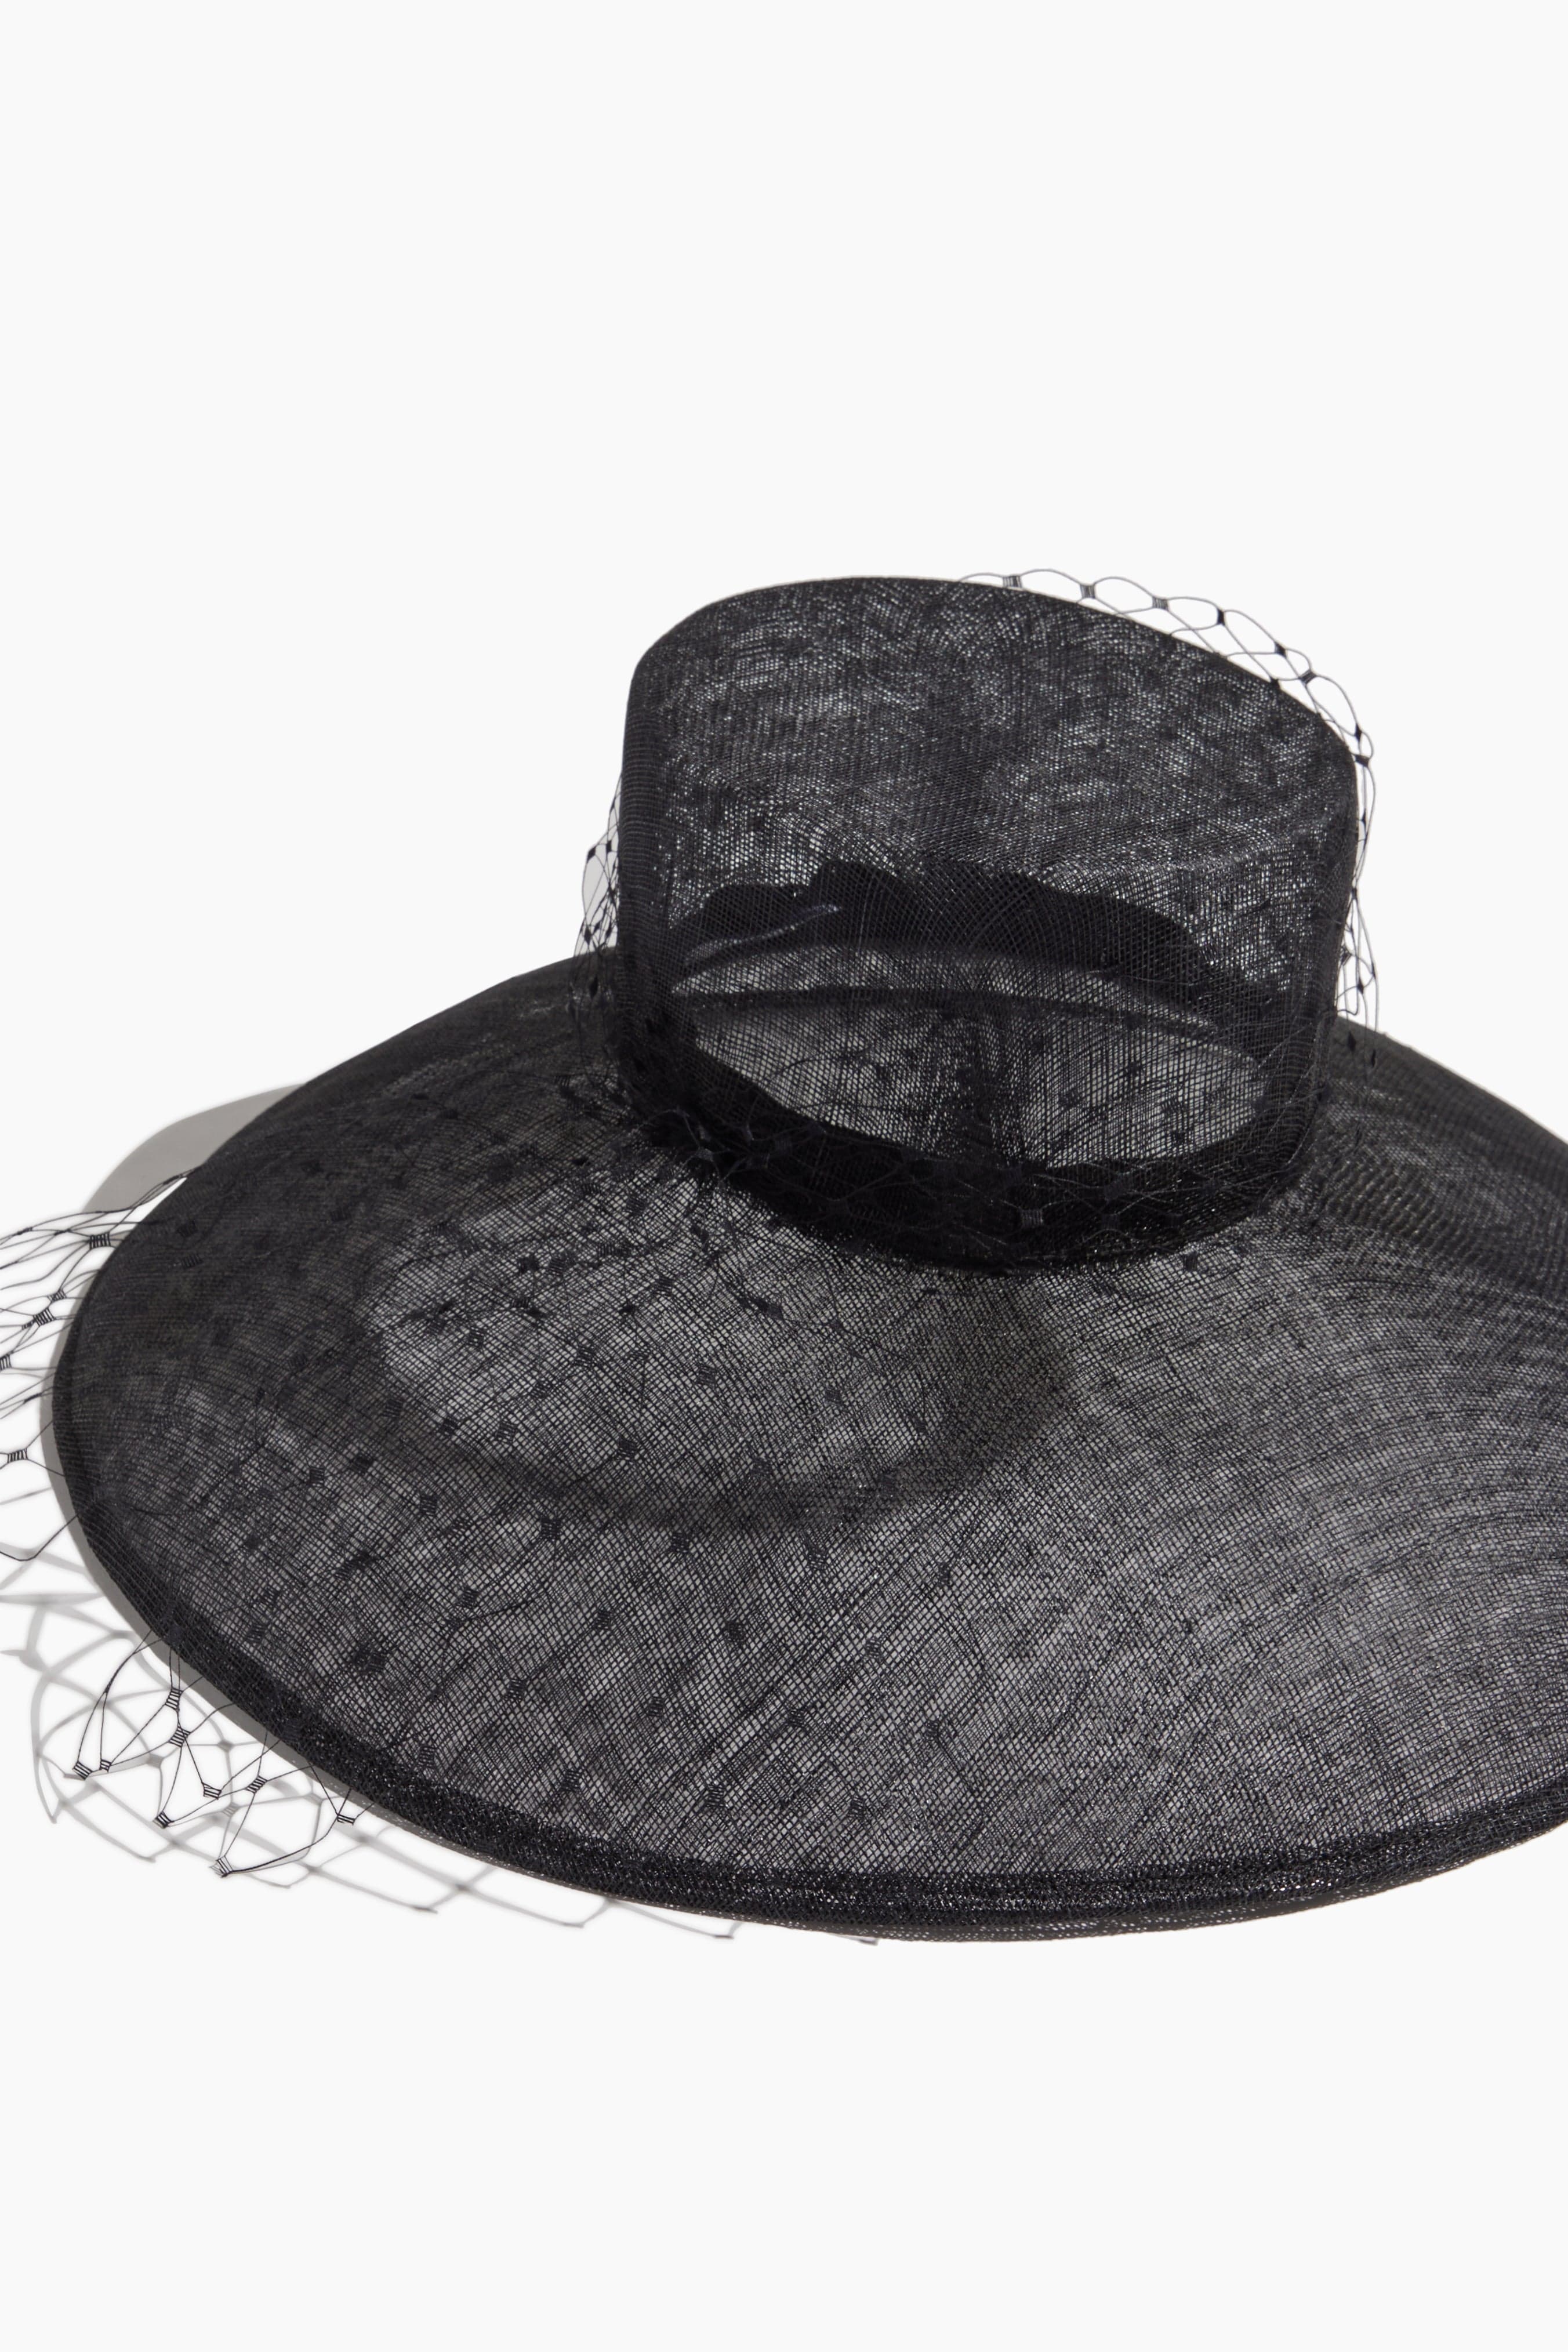 Gigi Burris Hats Joanne Hat in Black Gigi Burris Joanne Hat in Black